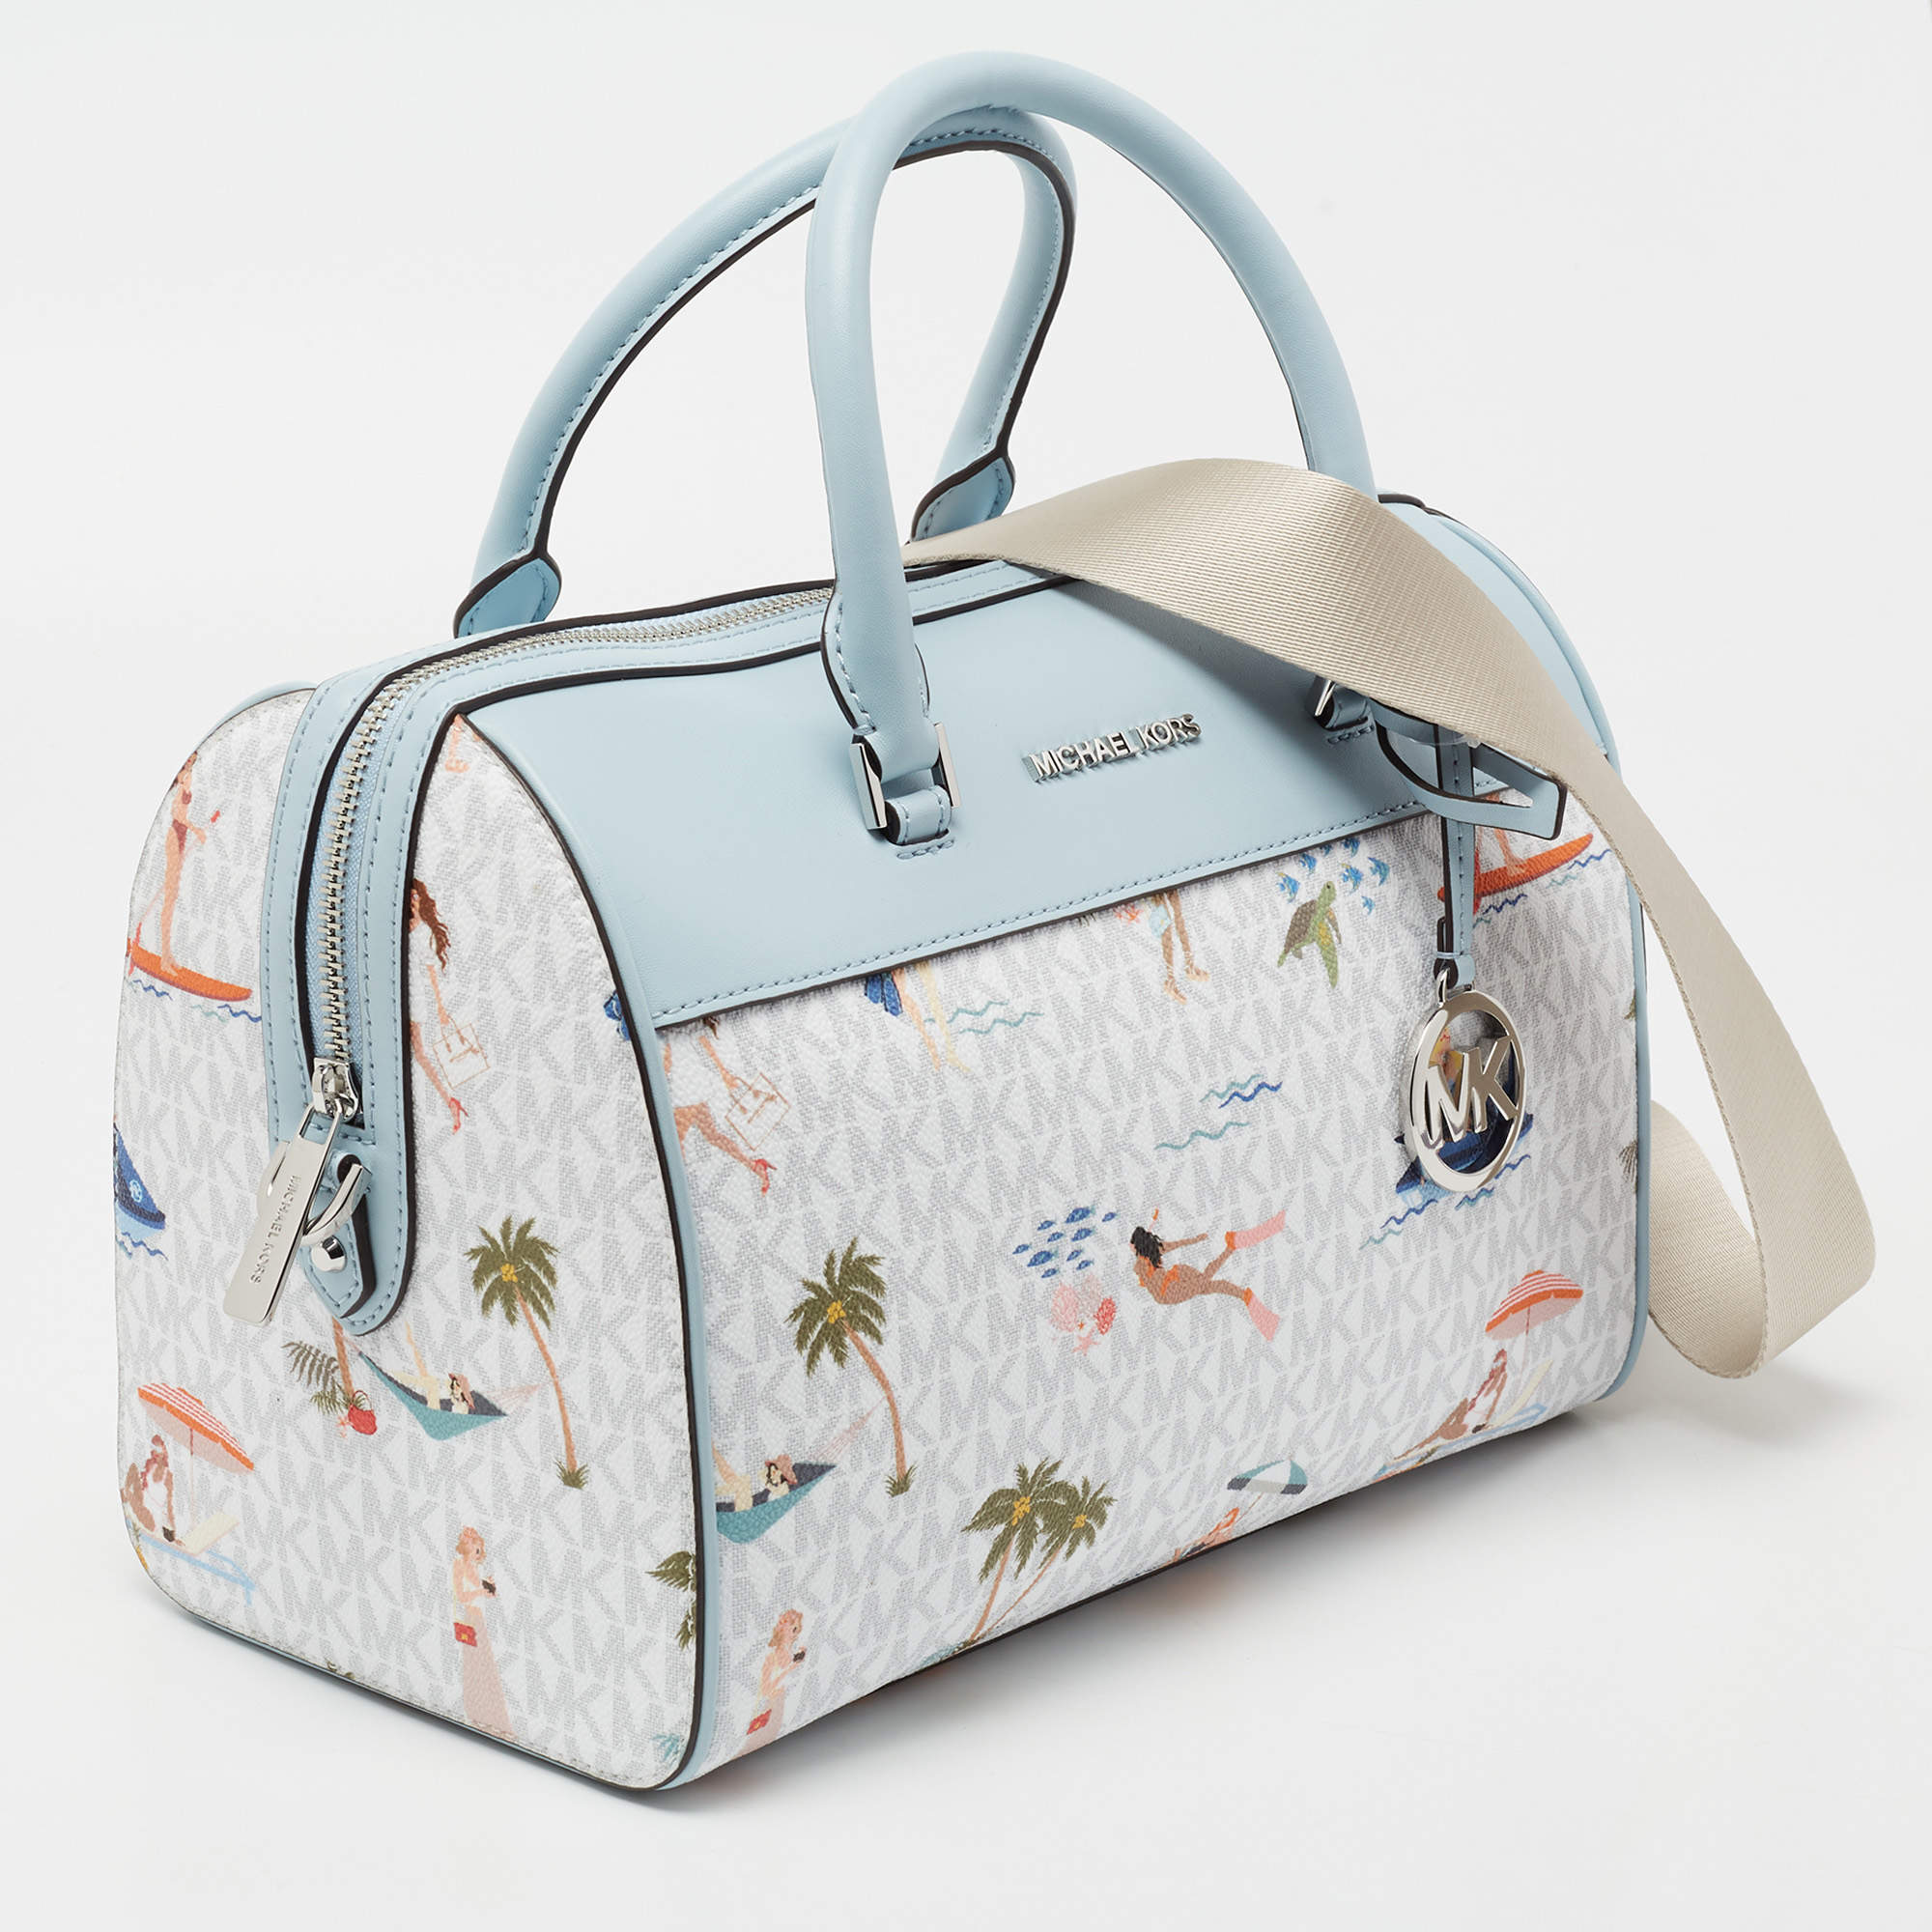 Michael Kors MK Jet Set Girls Travel Medium Duffle Bag Bright White Blue  Beach